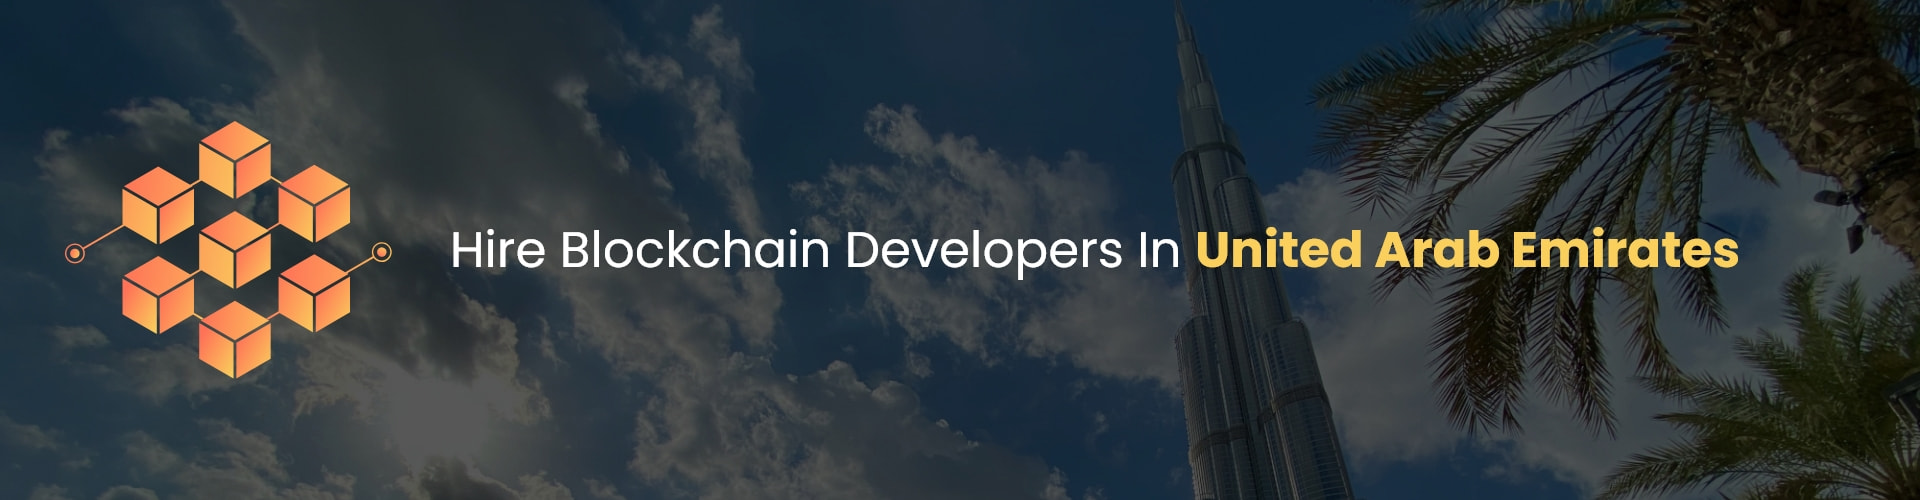 hire blockchain developers in united arab emirates